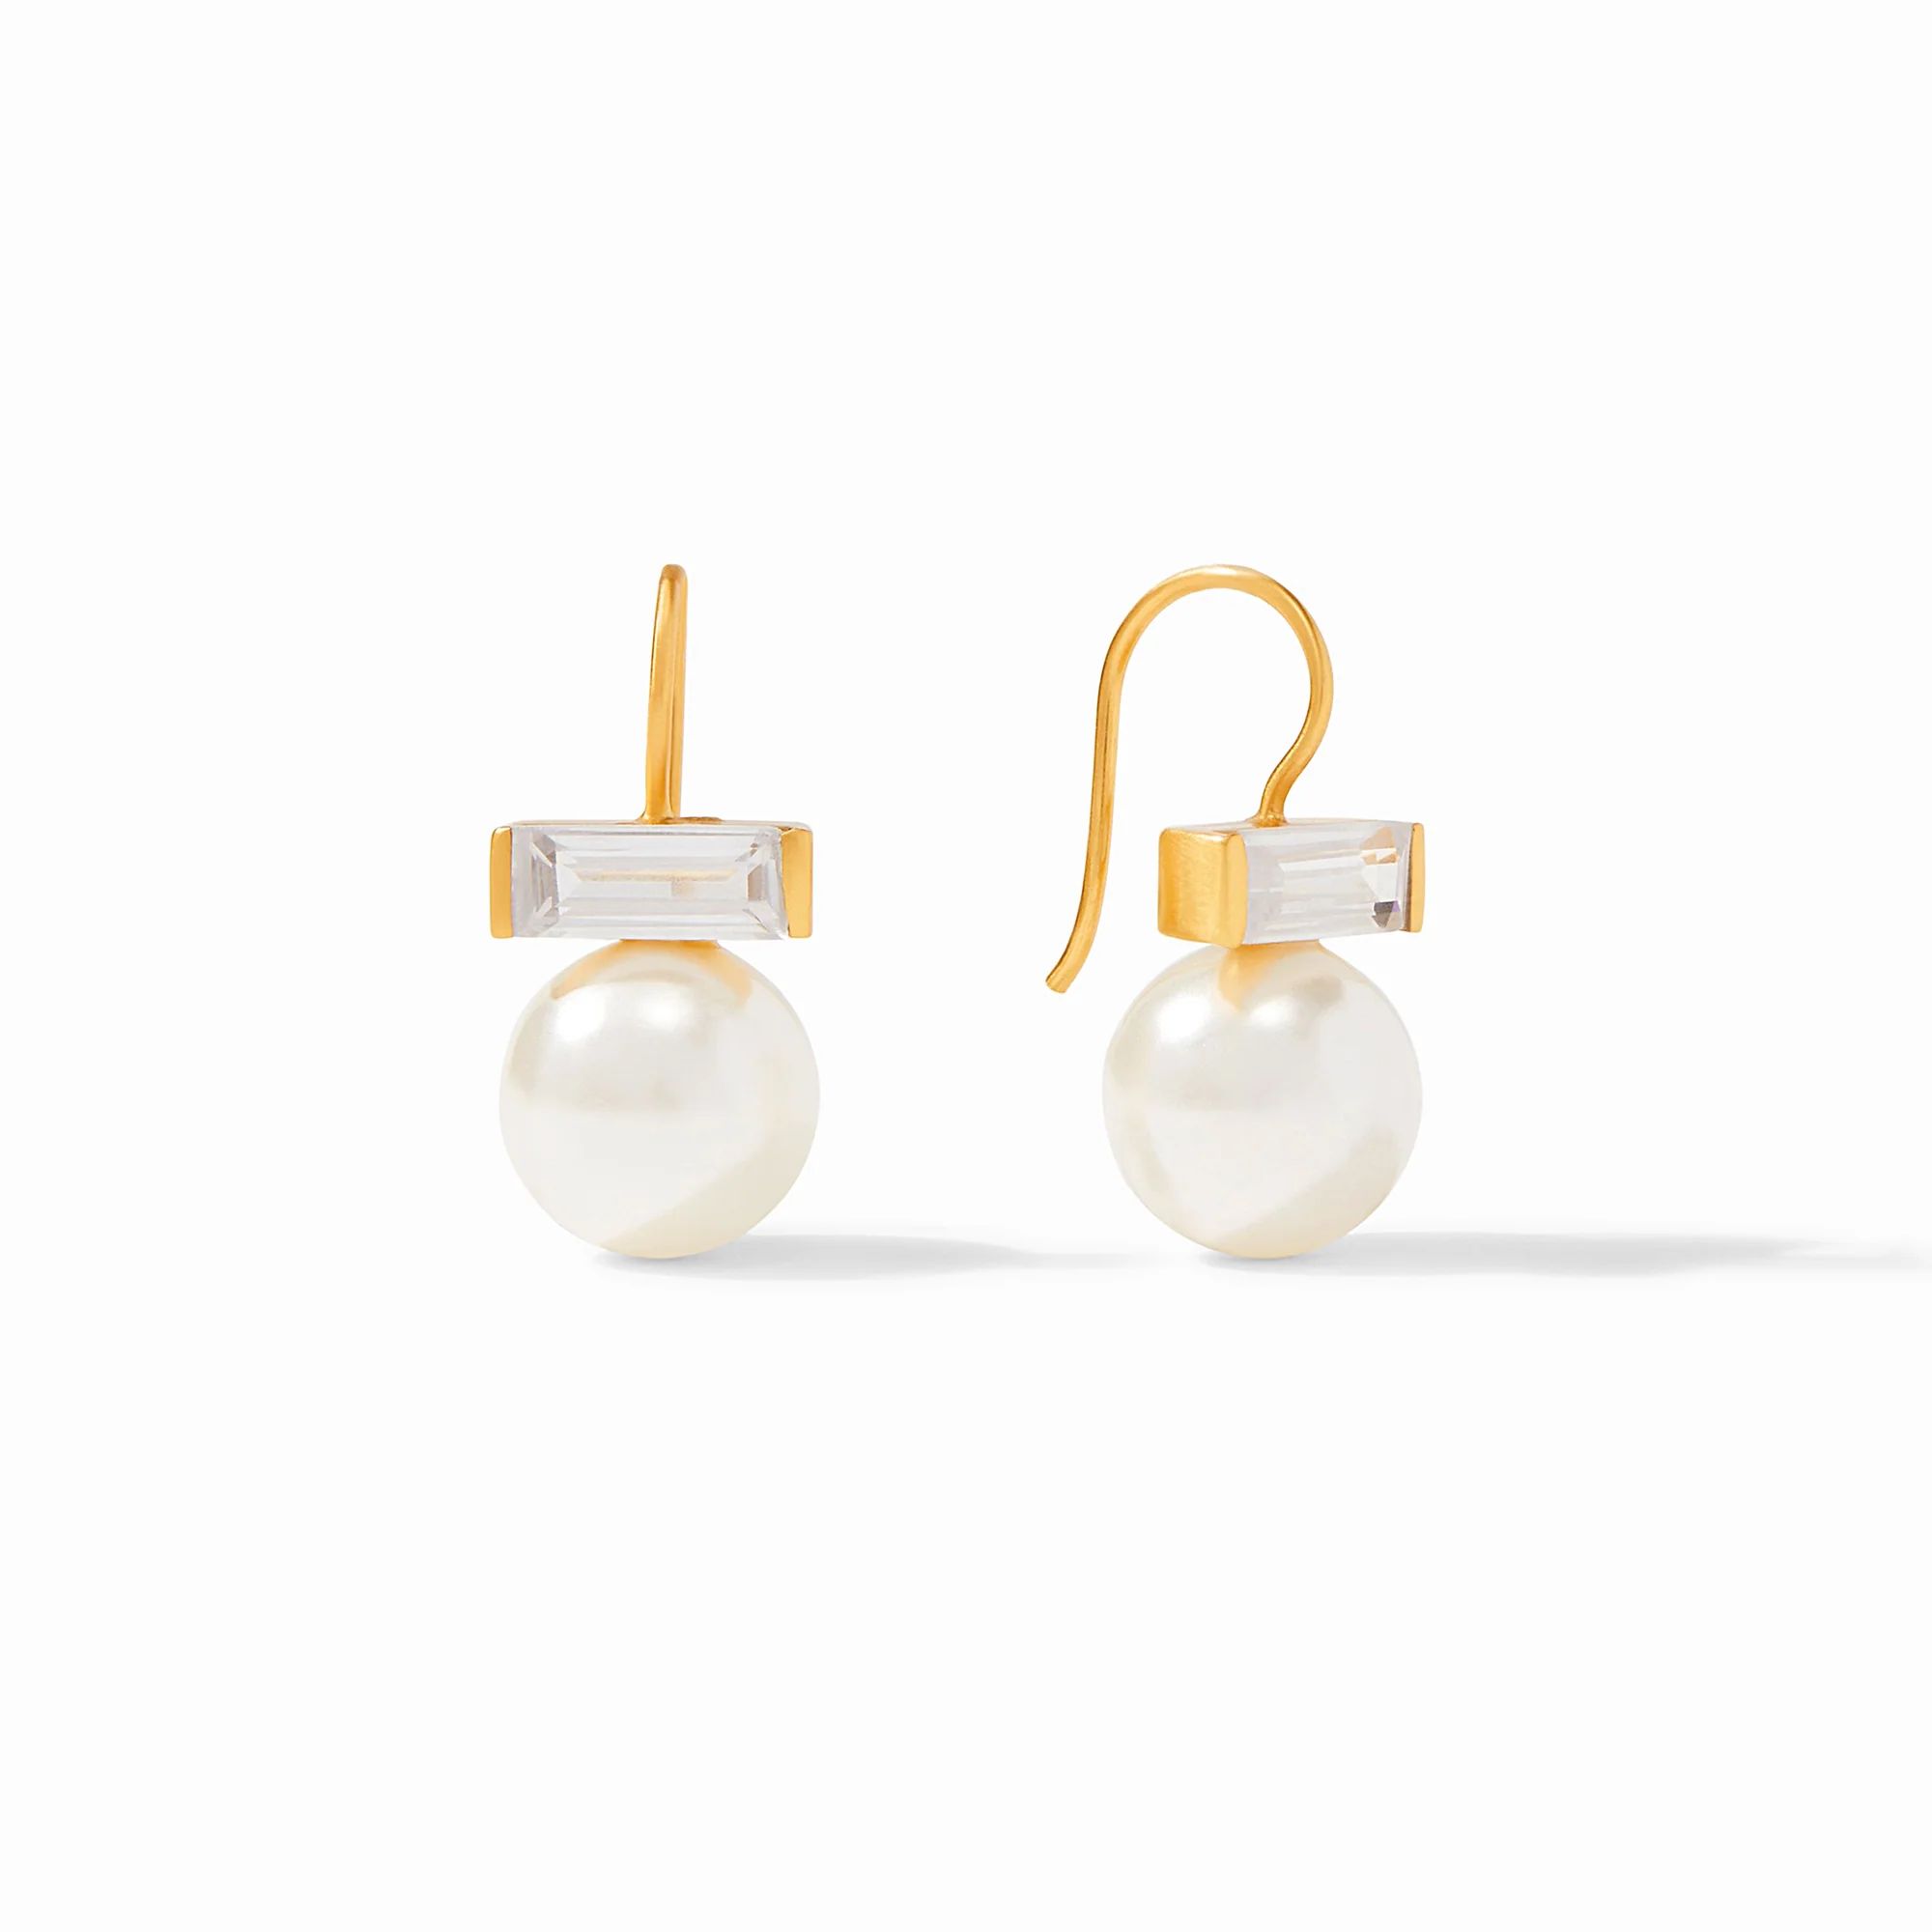 Charlotte Gold & Pearl Earrings | Julie Vos | Julie Vos